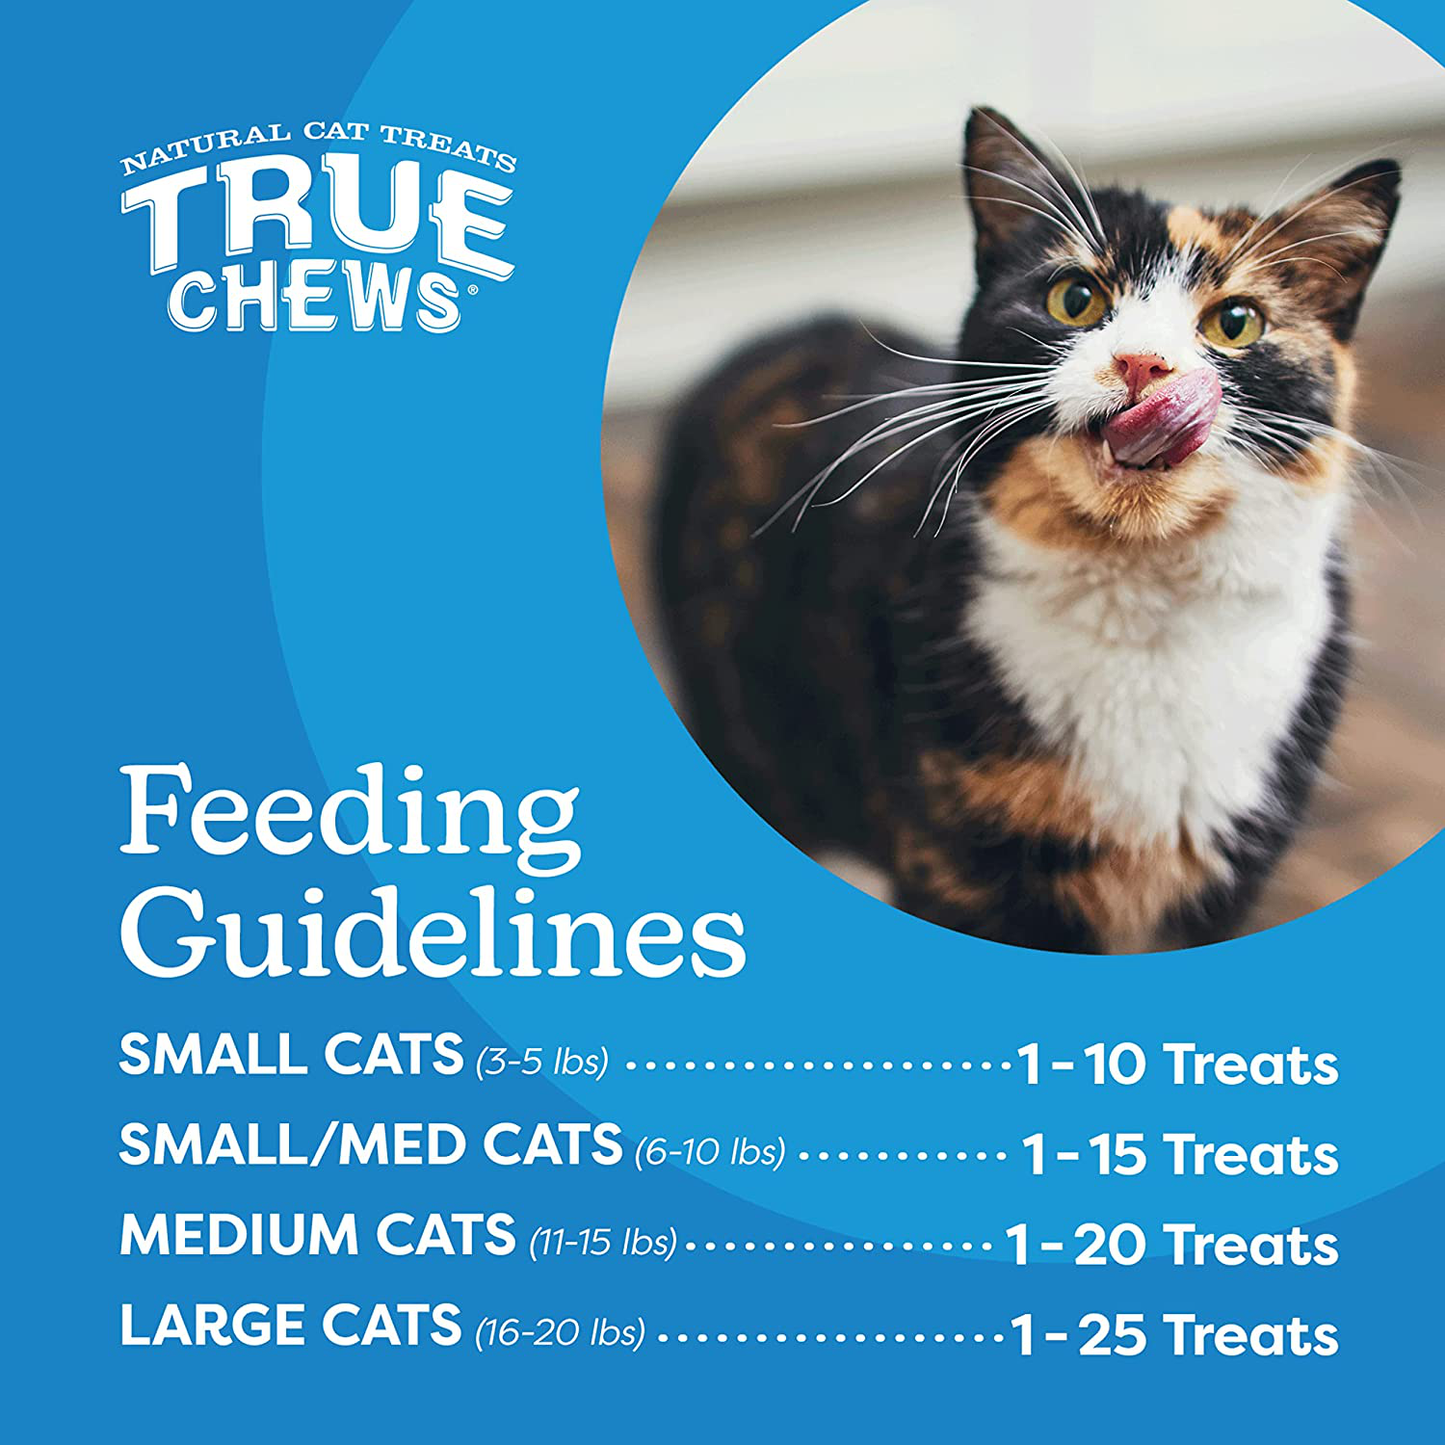 True Chews Natural Cat Treats Chewy Duck Recipe, 3 Oz Animals & Pet Supplies > Pet Supplies > Cat Supplies > Cat Treats True Chews   